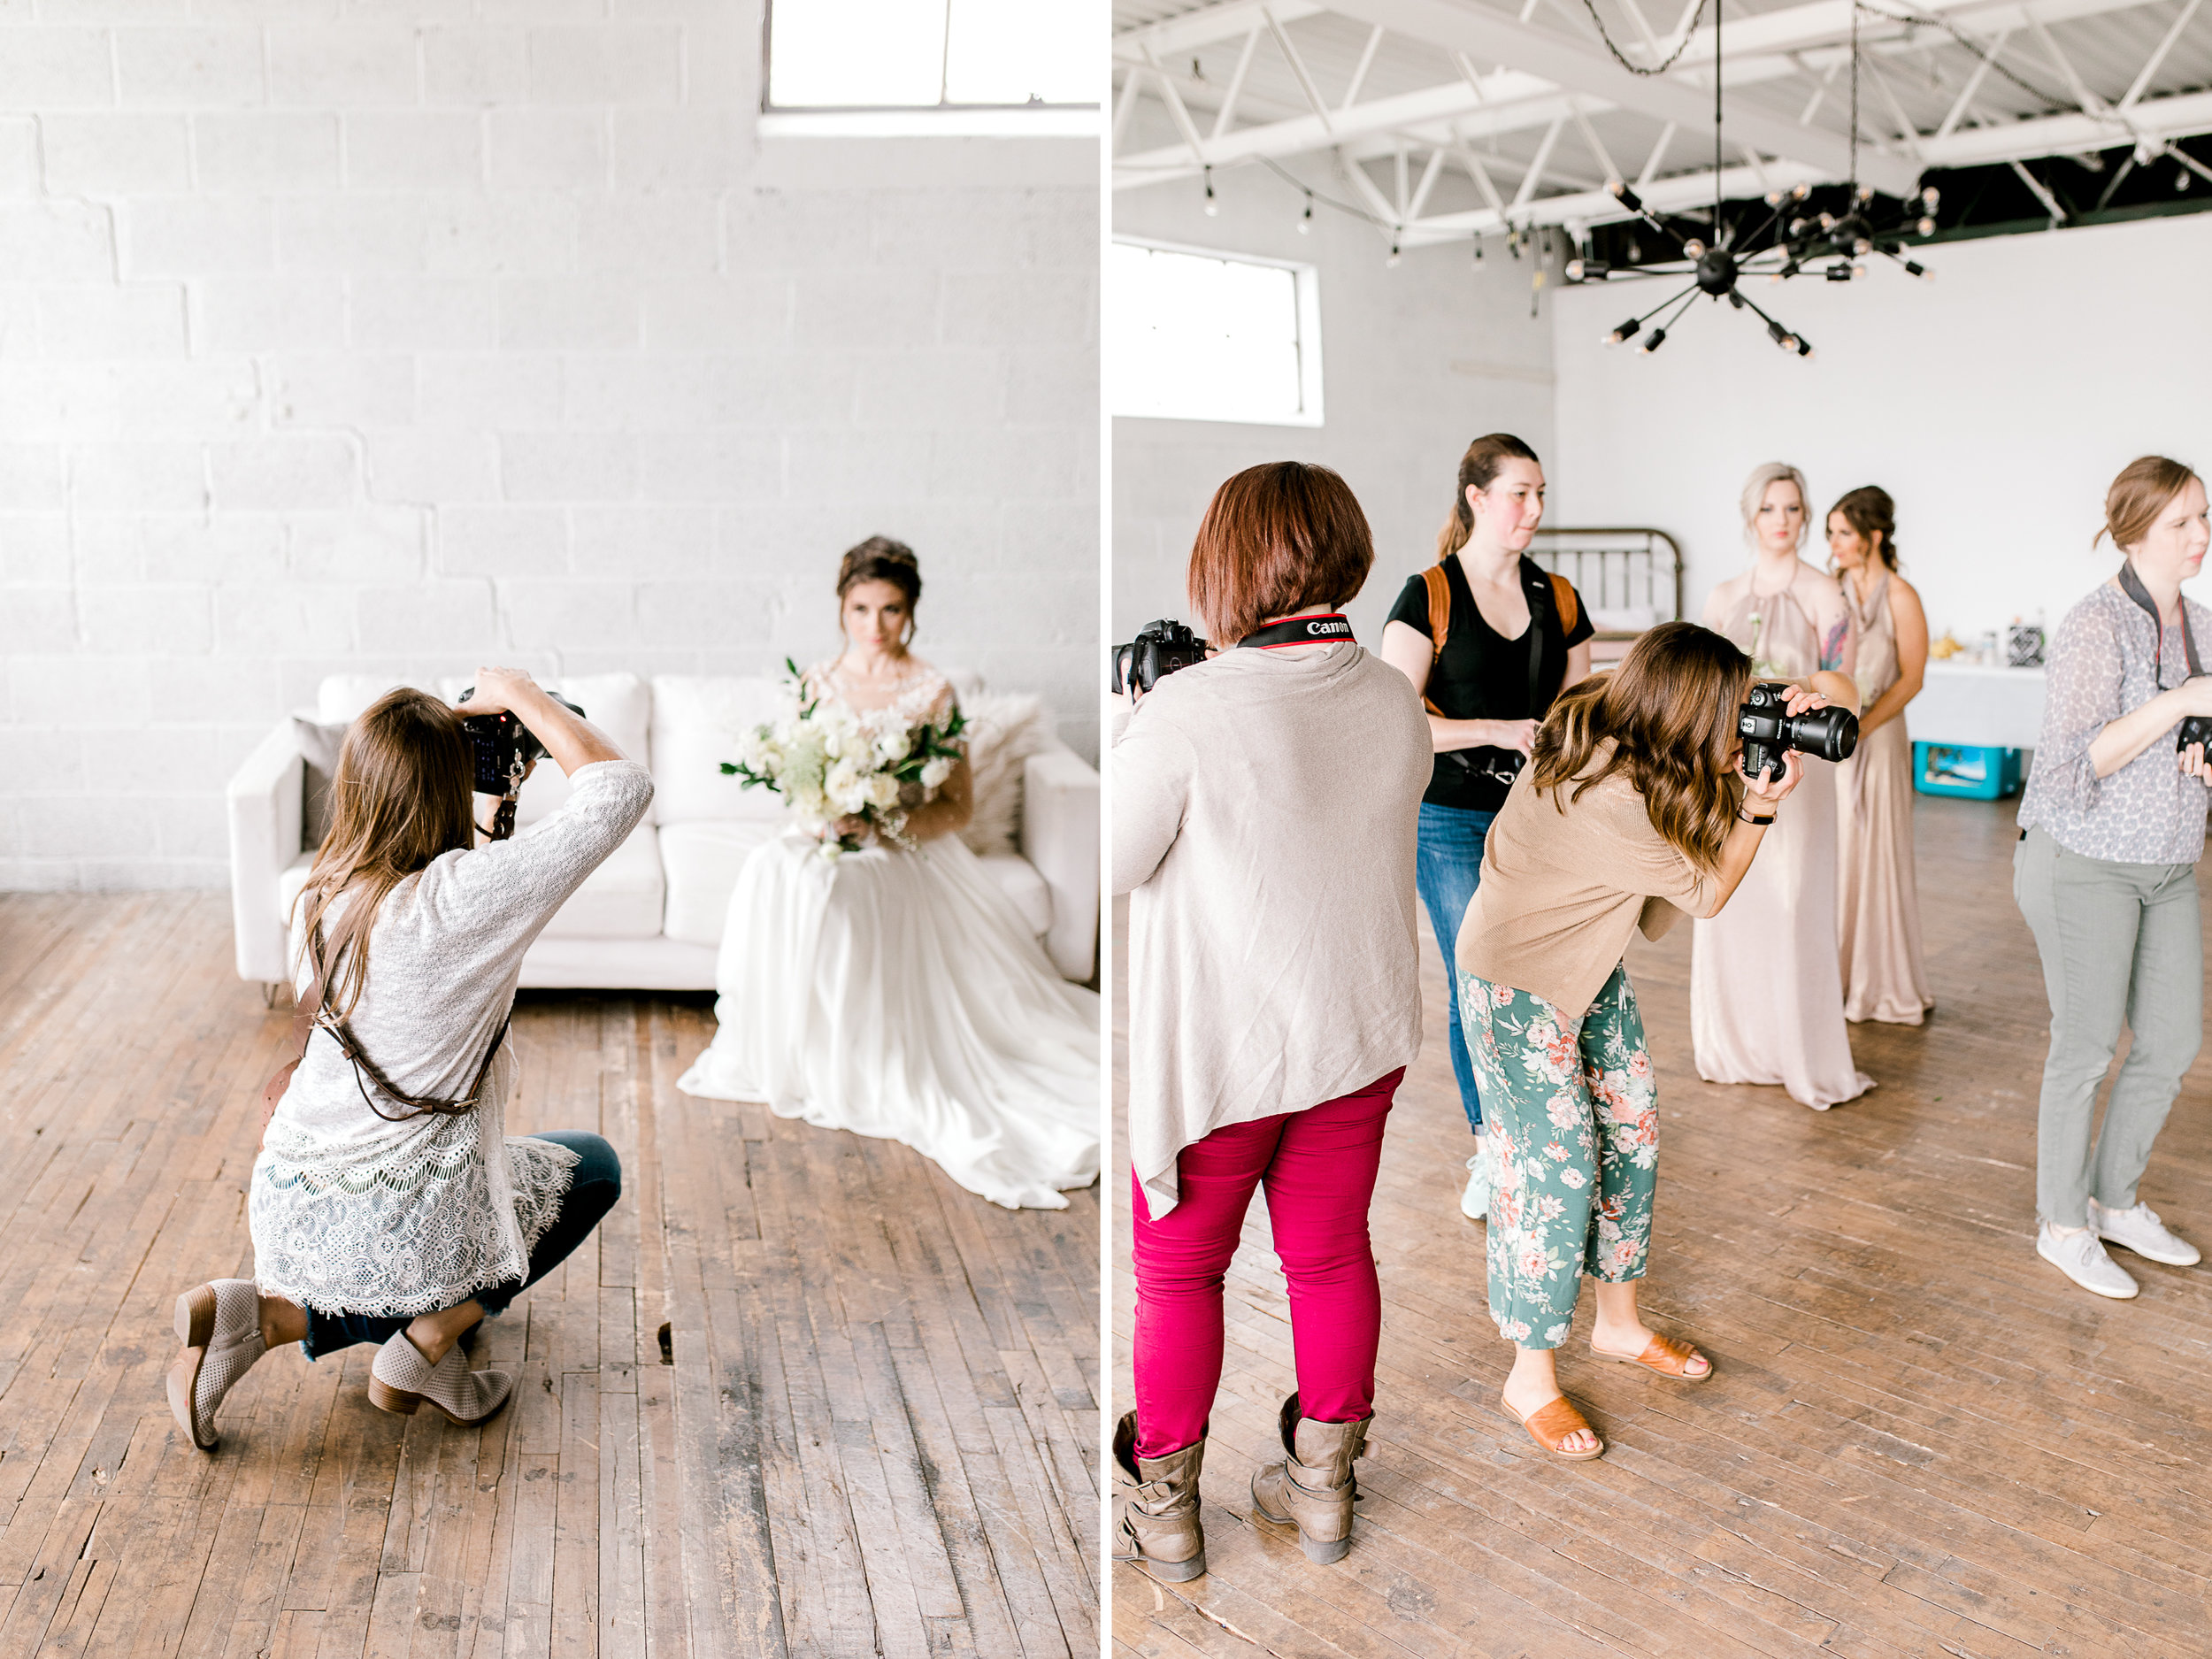 Styled Wedding Workshop | Champagne Bridesmaids Dresses | Edgy Romantic Wedding | West Michigan Wedding Photographer